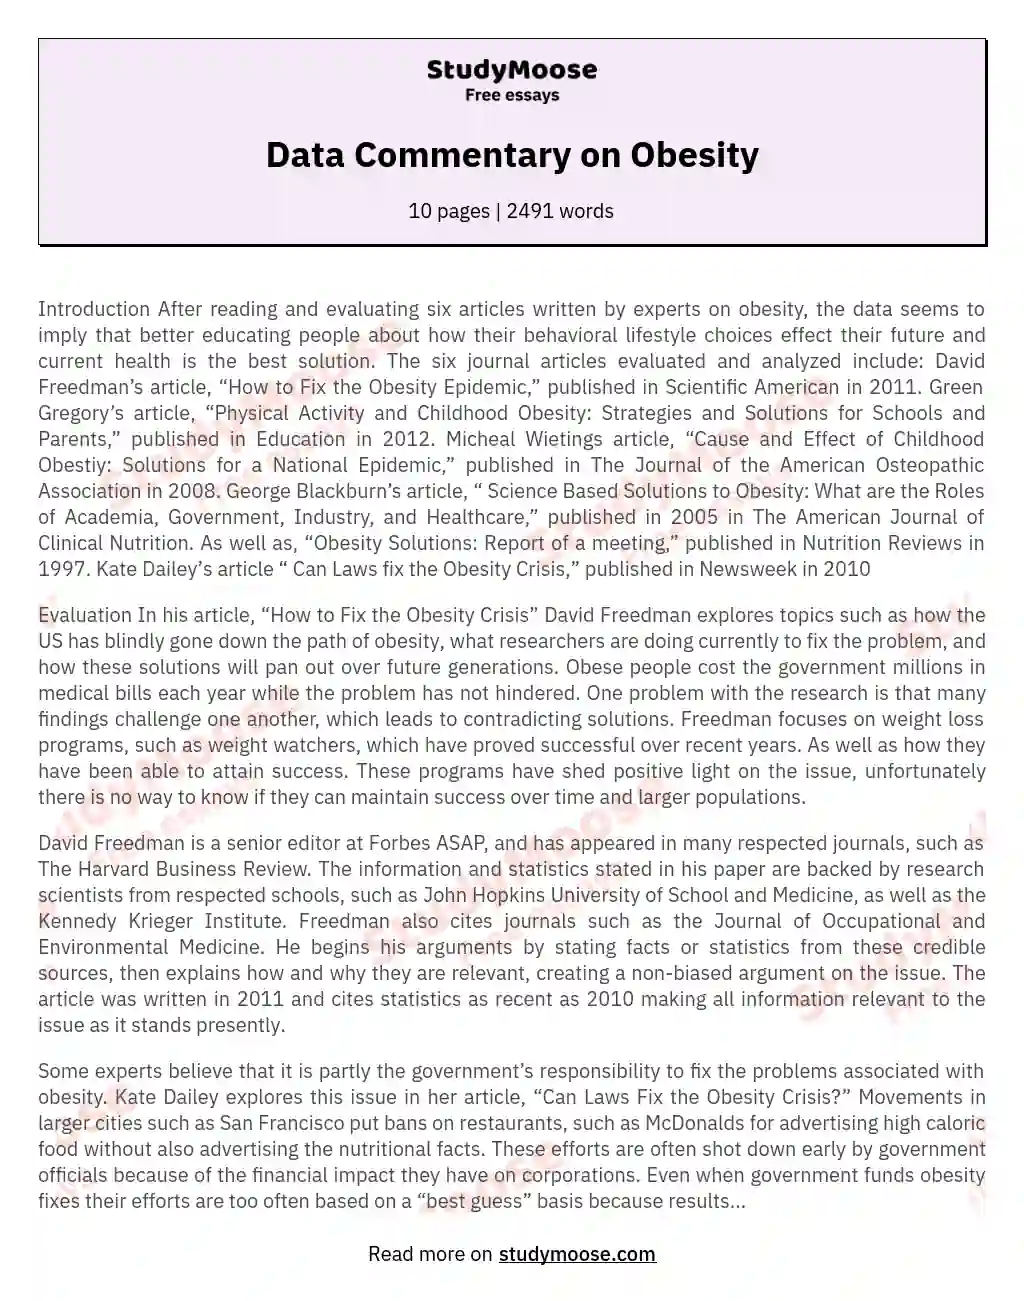 Enhancing Education to Combat Obesity essay